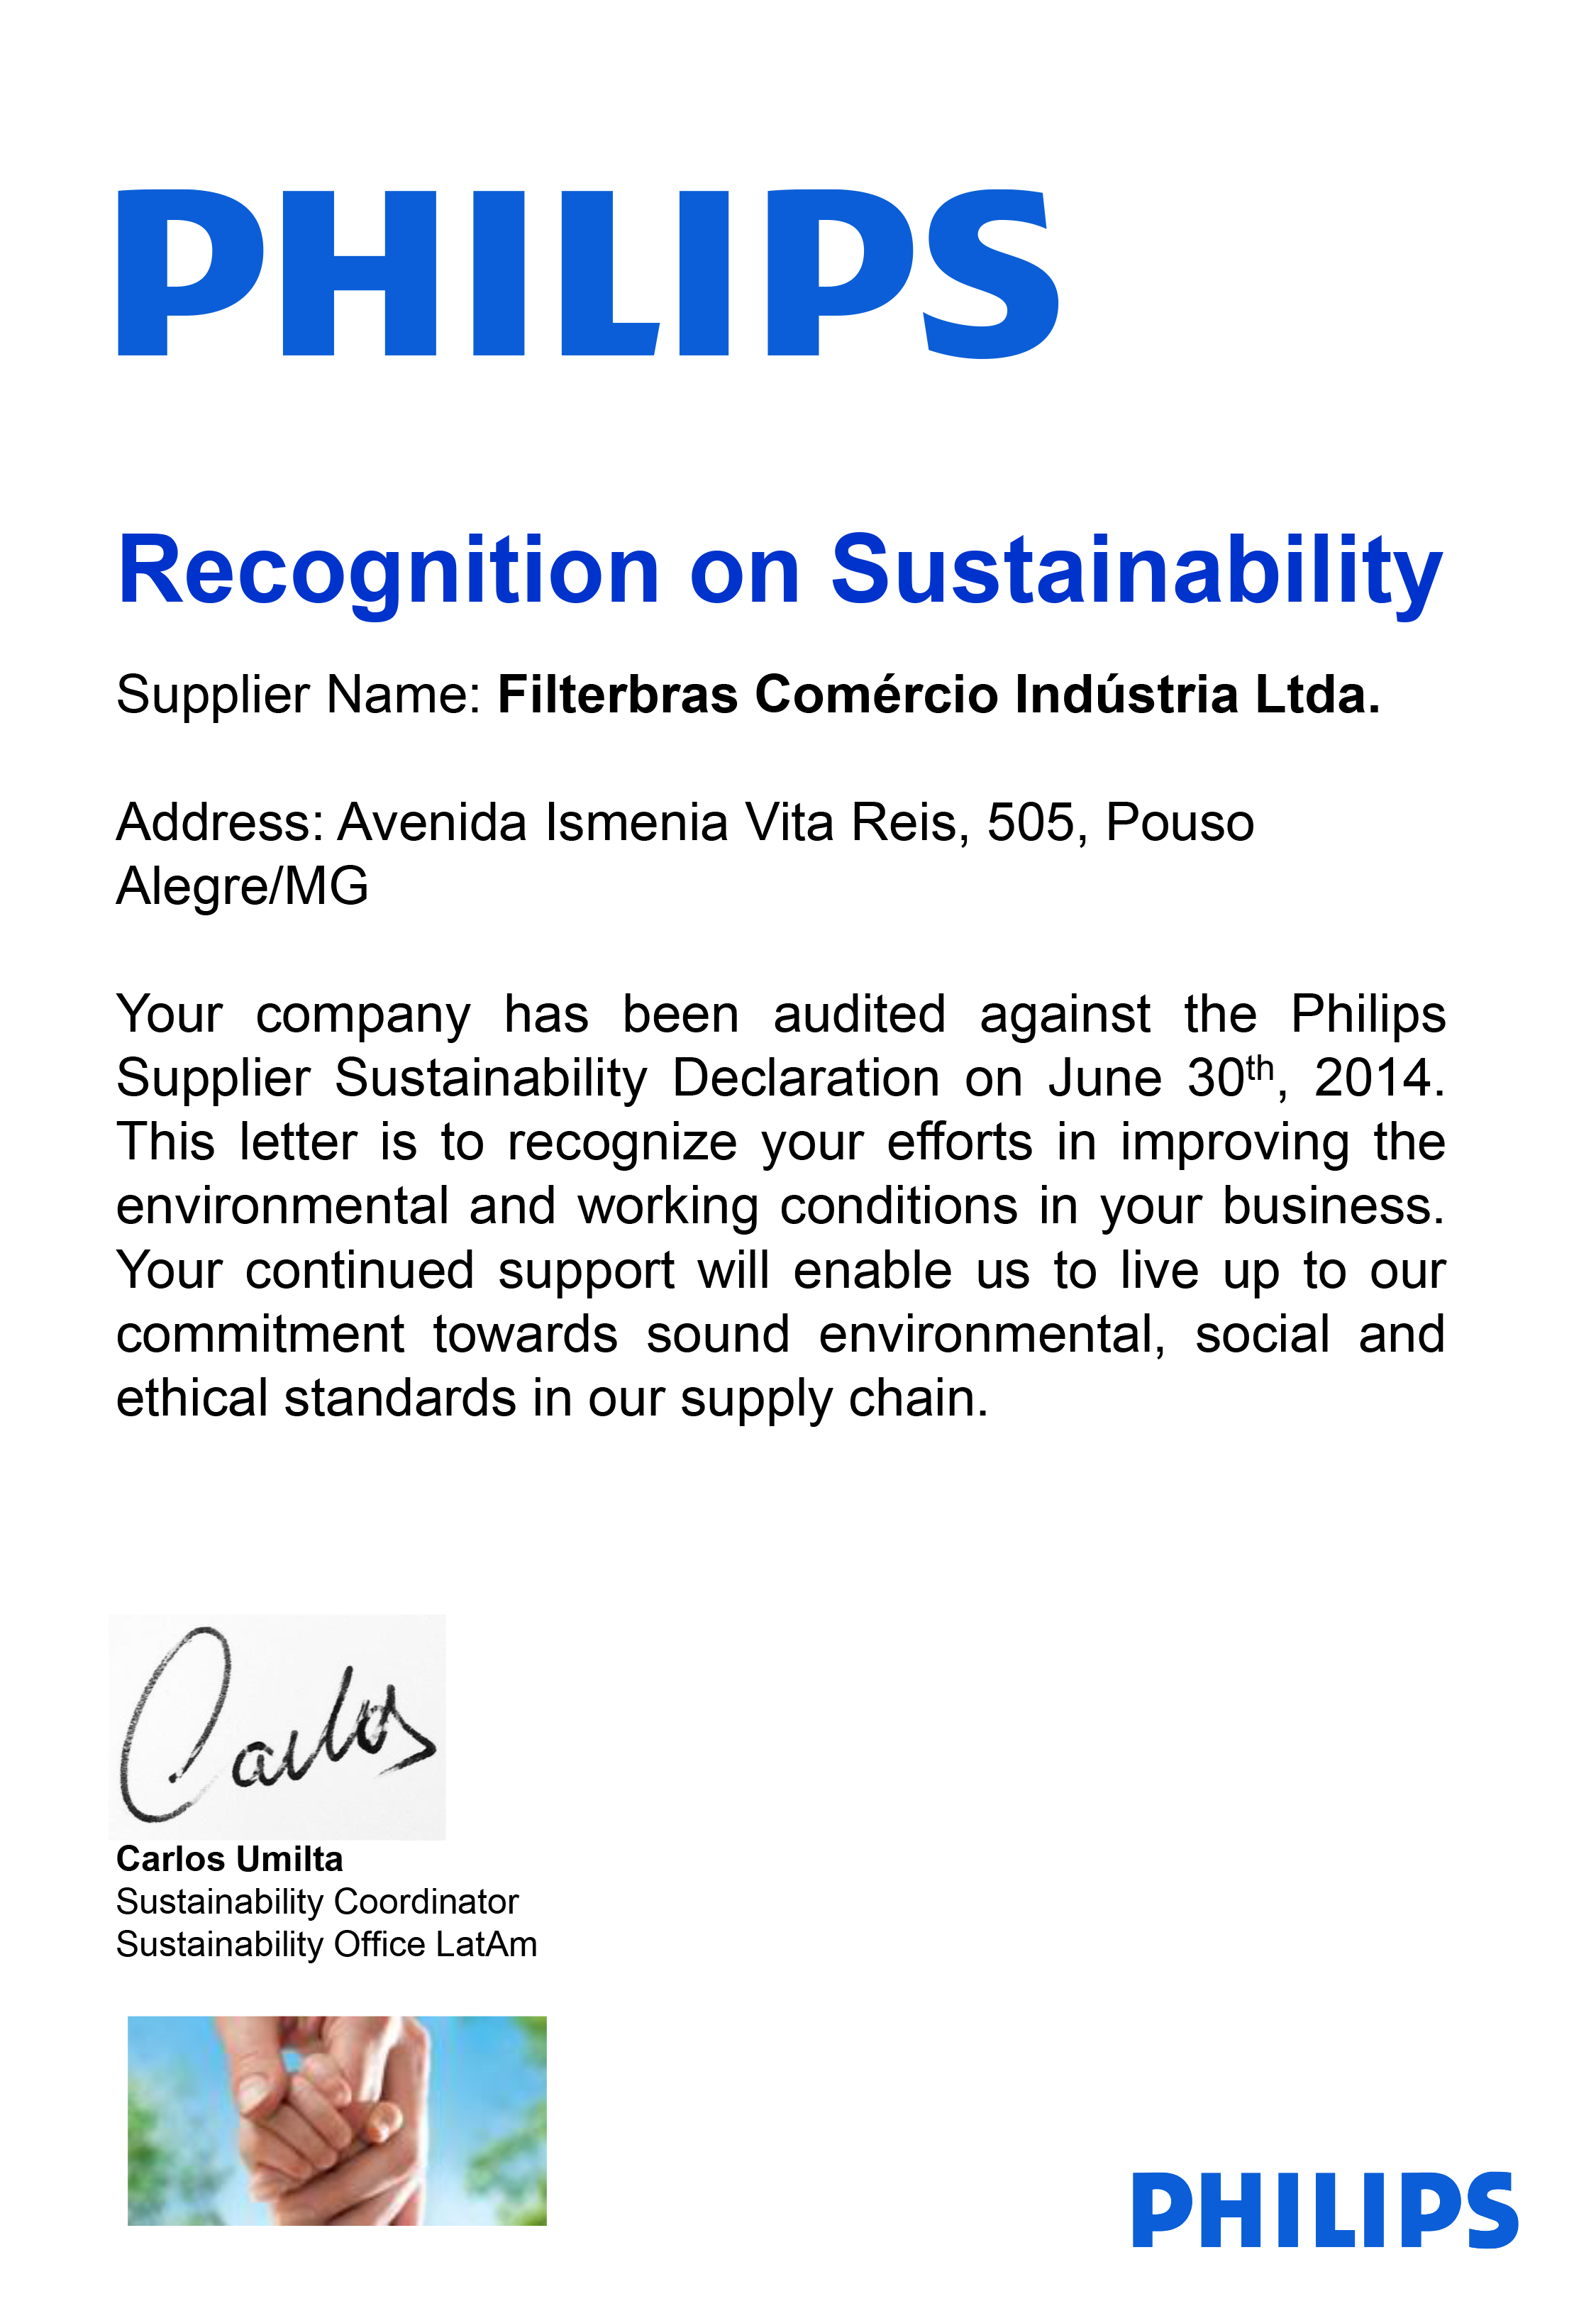 https://filterbras.com.br/novo/wp-content/uploads/2014/10/FILTERBRAS-Green-Certificate-2014.png